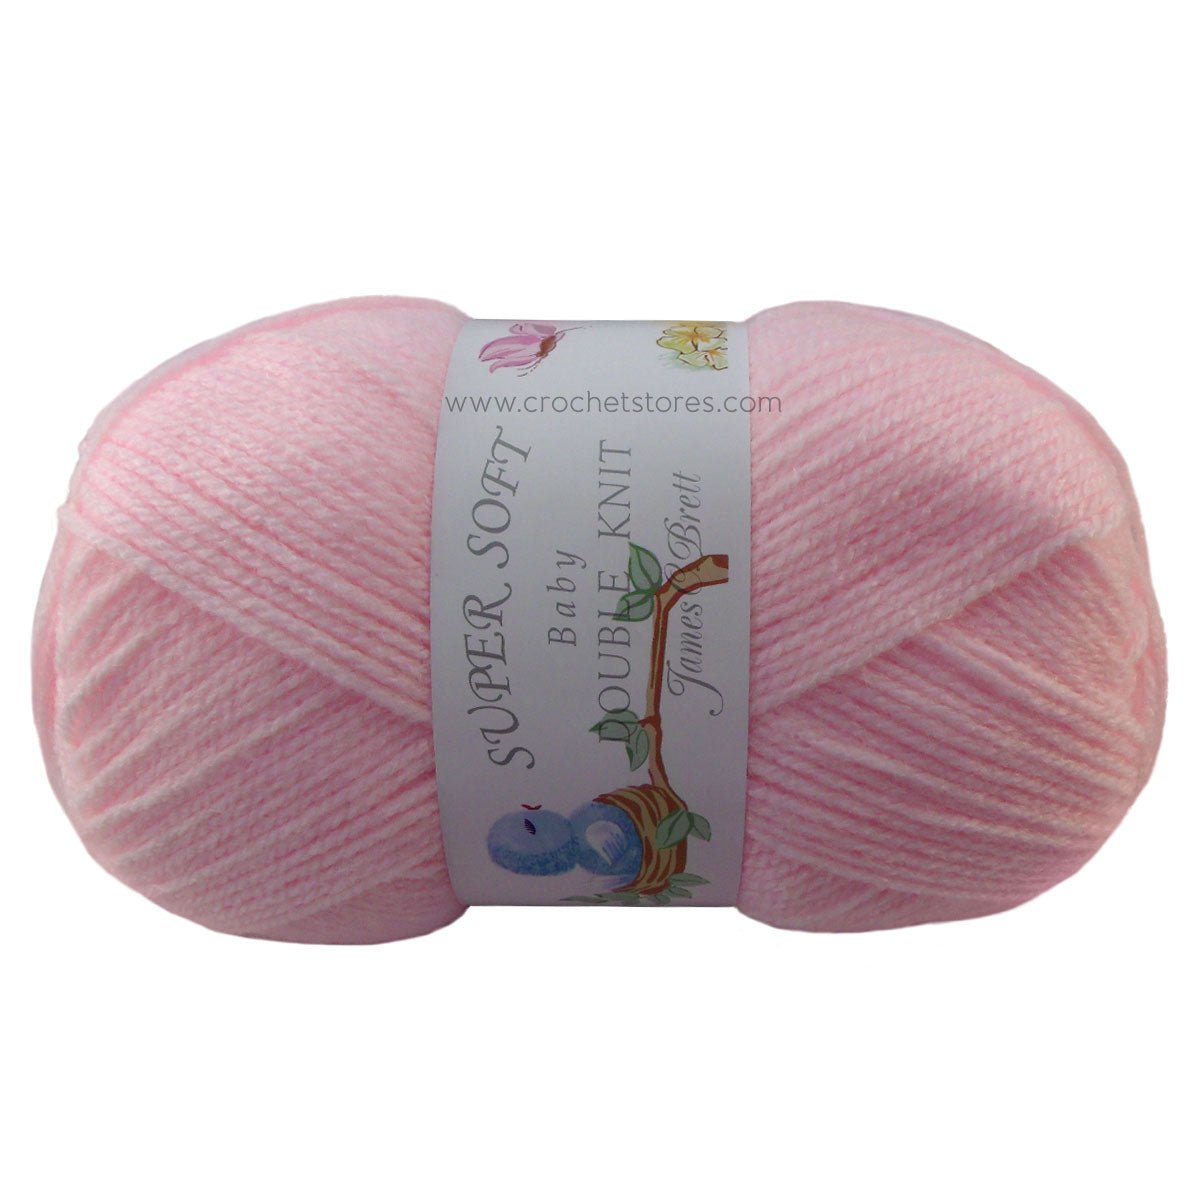 SUPER SOFT - CrochetstoresBB65060019090145